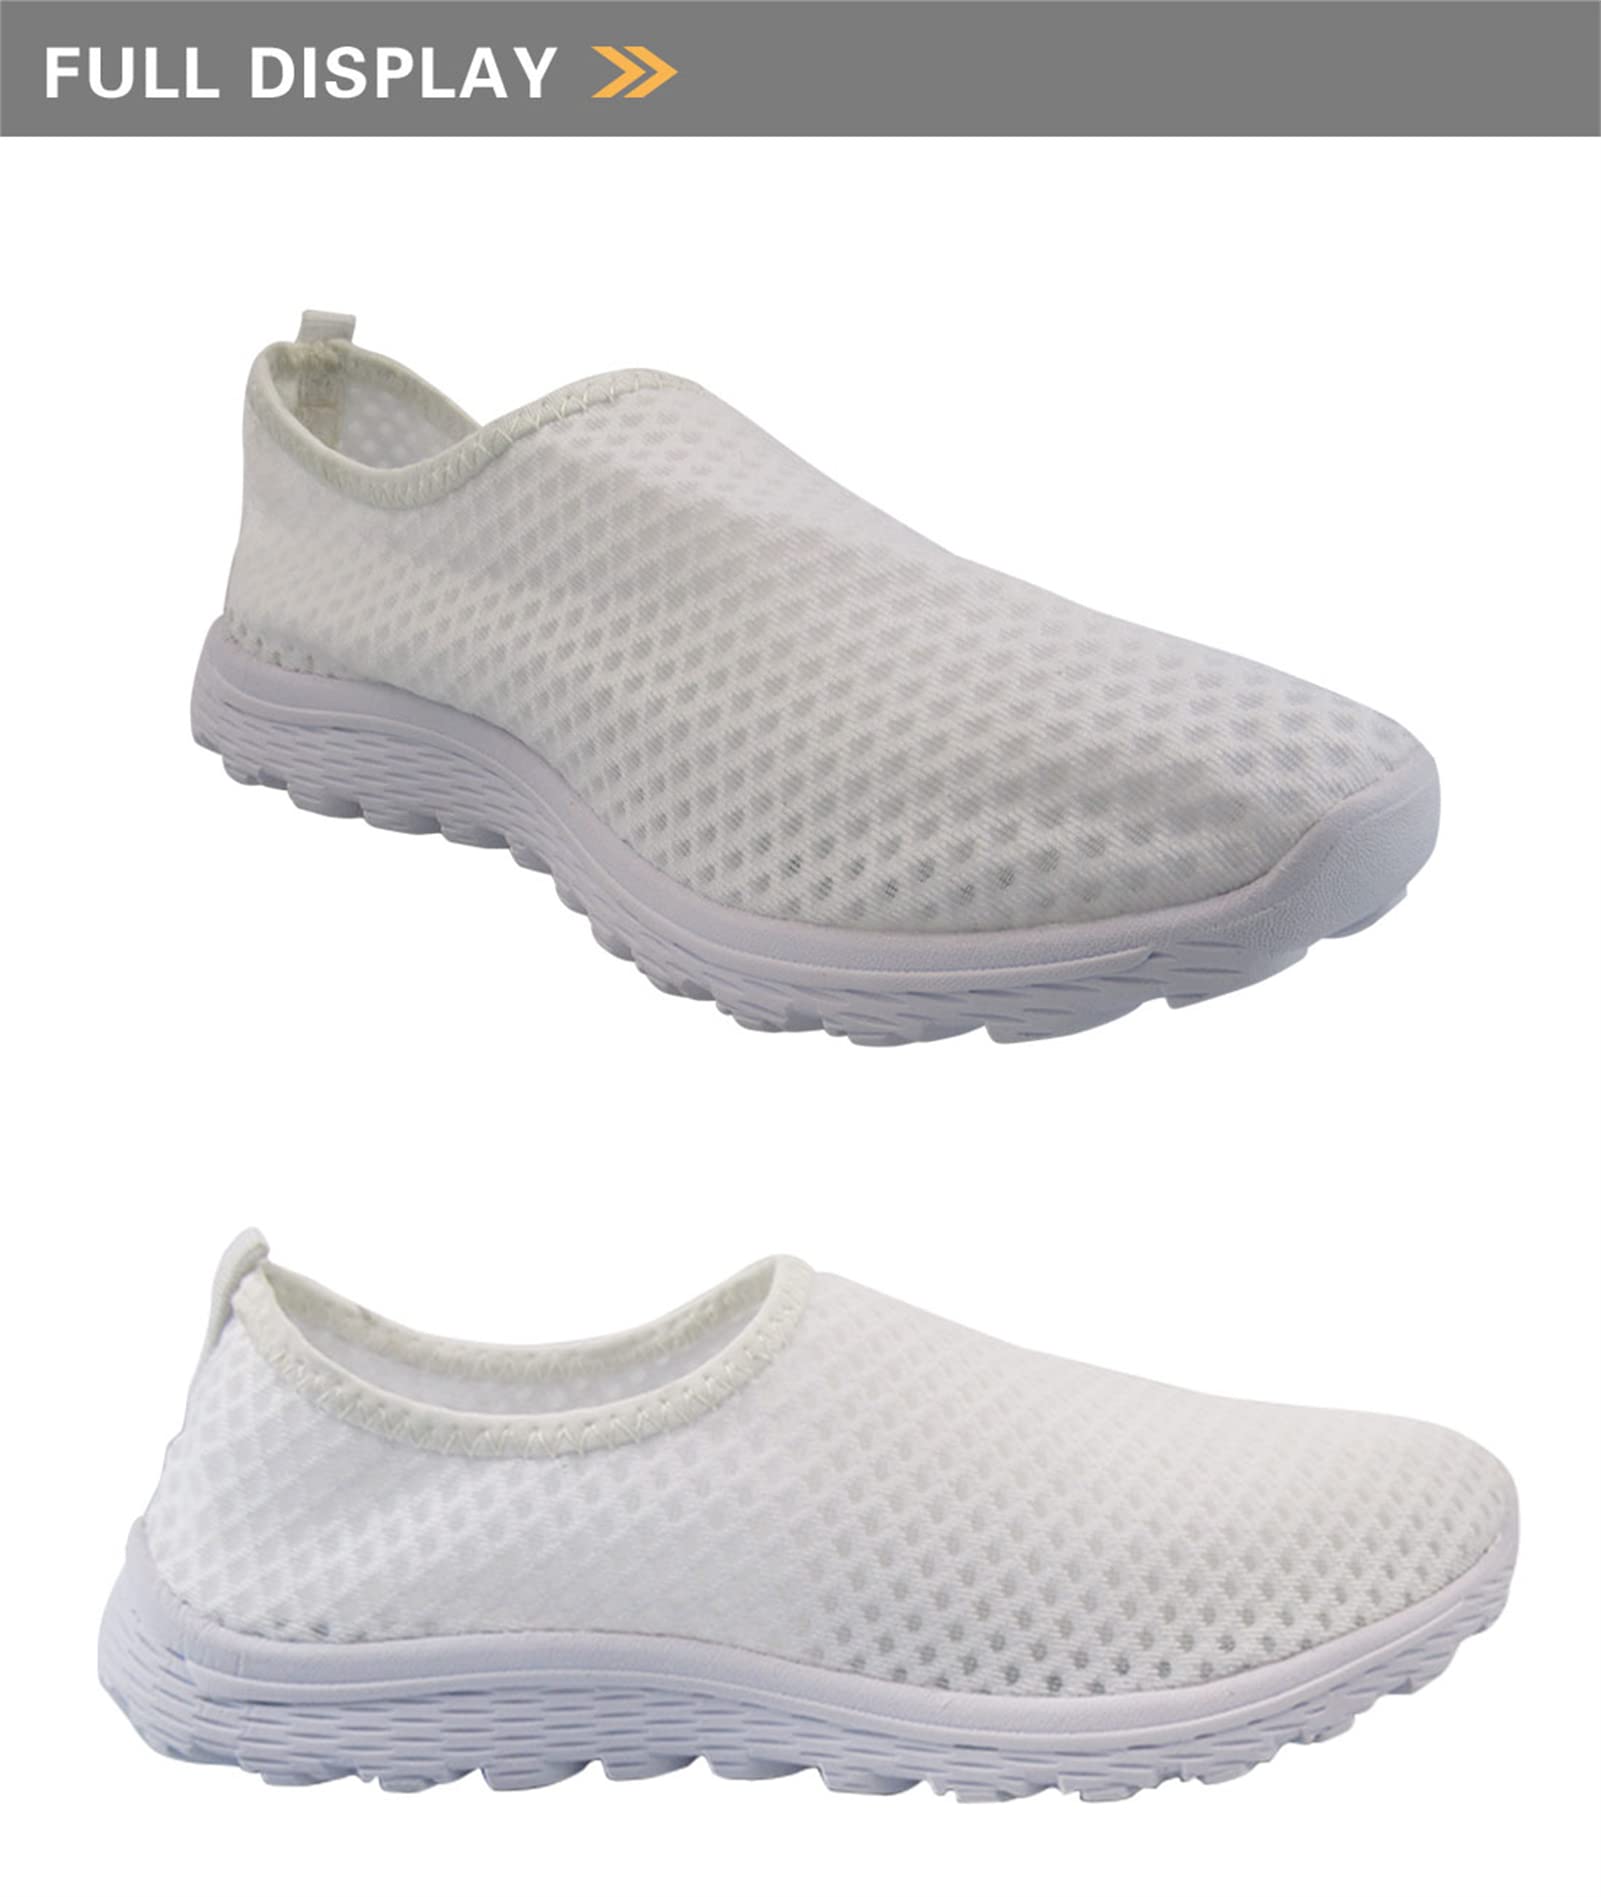 INSTANTARTS Fall Mushroom Womens Water Shoes Casual Air Mesh Sports Aqua Shoes Lightweight Slip-on Jogging Walking Footwear